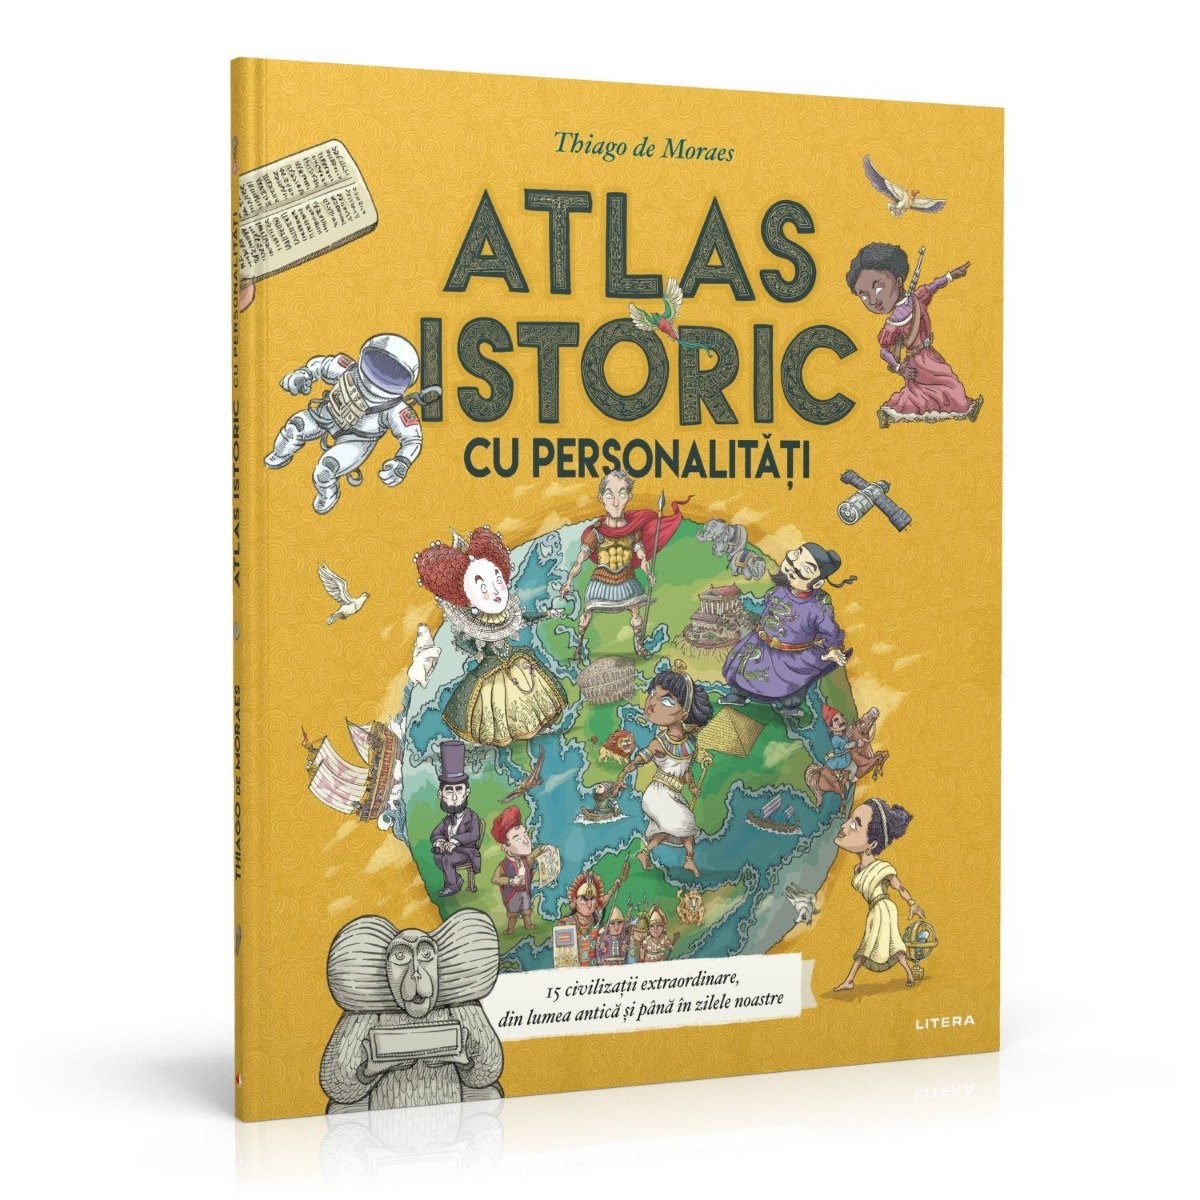 Atlas istoric cu personalitati, Thiago de Moraes Atlas